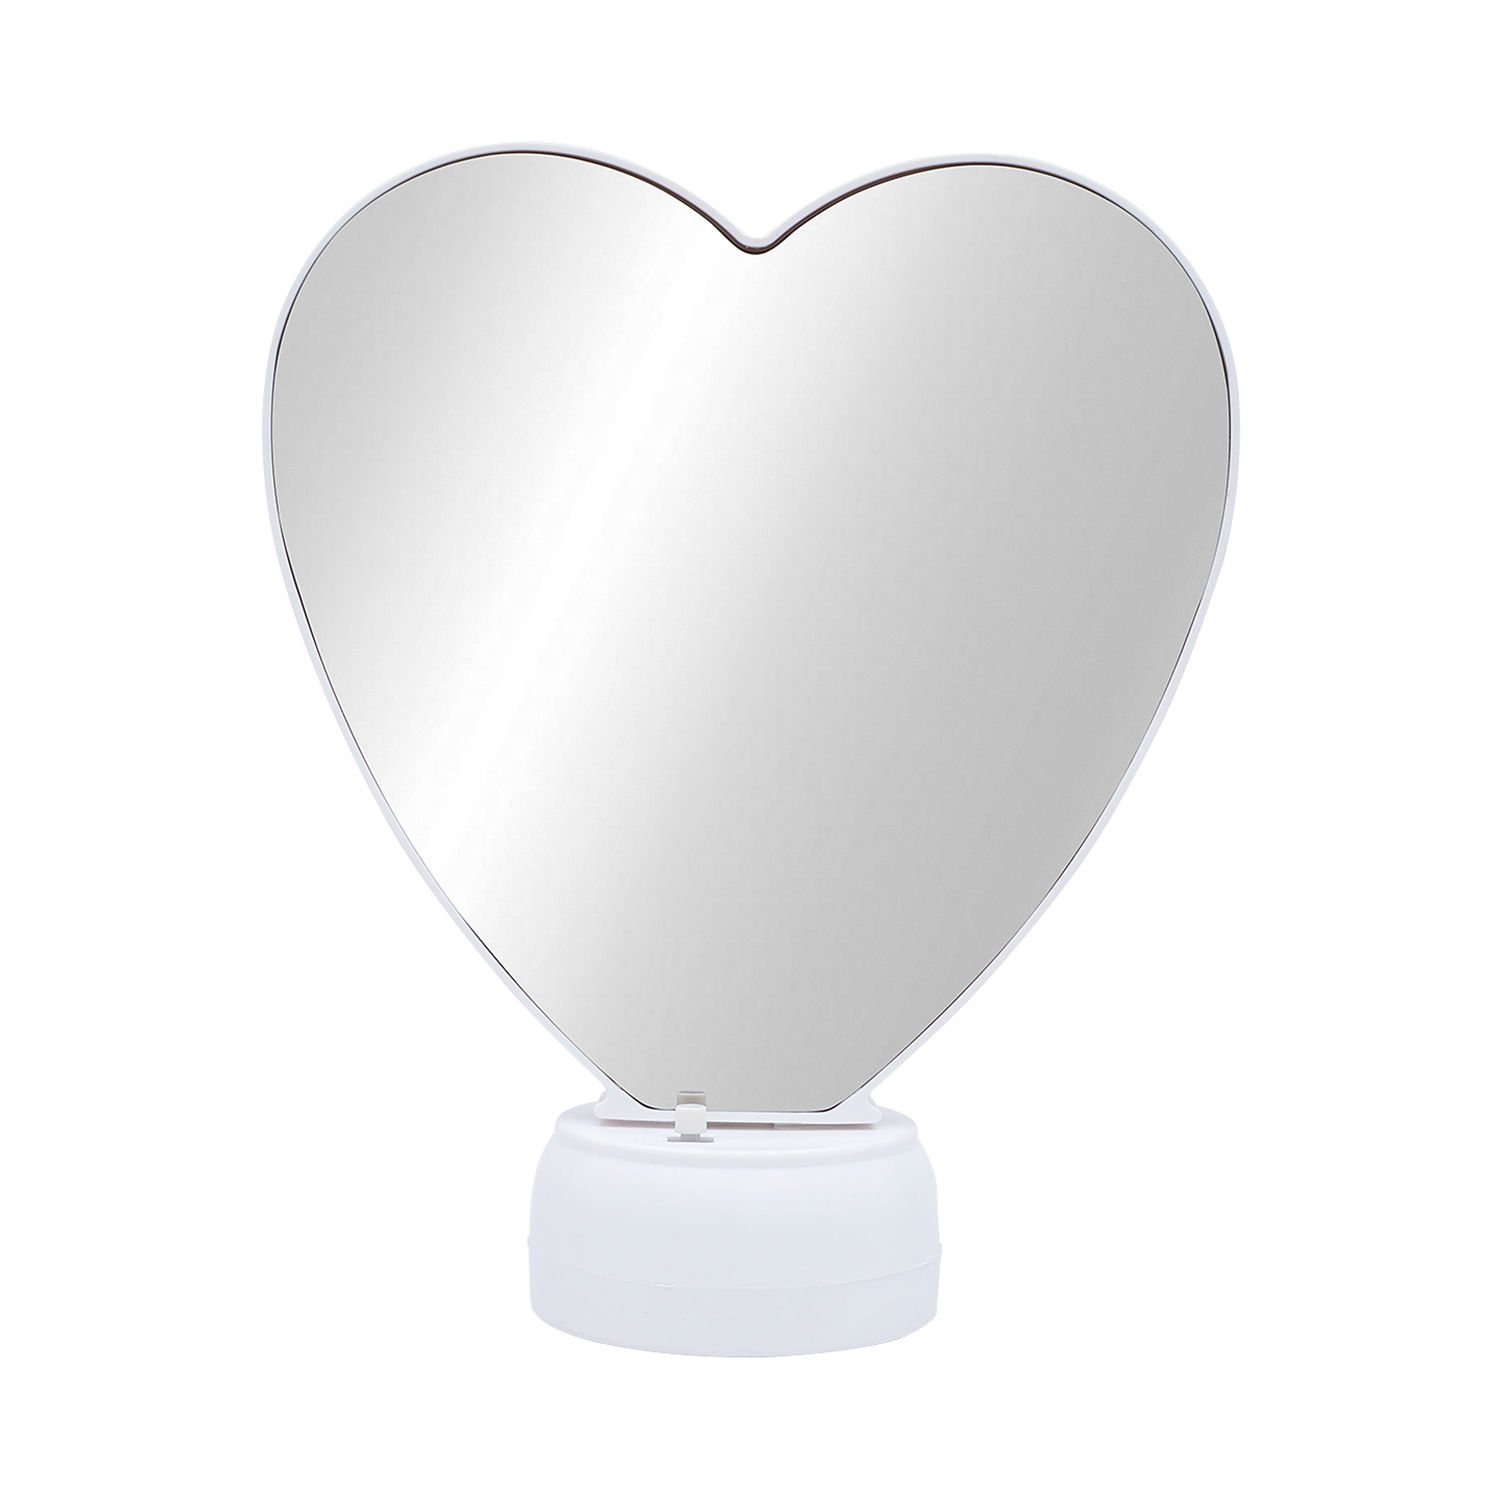 heart shape magic mirror photo frame